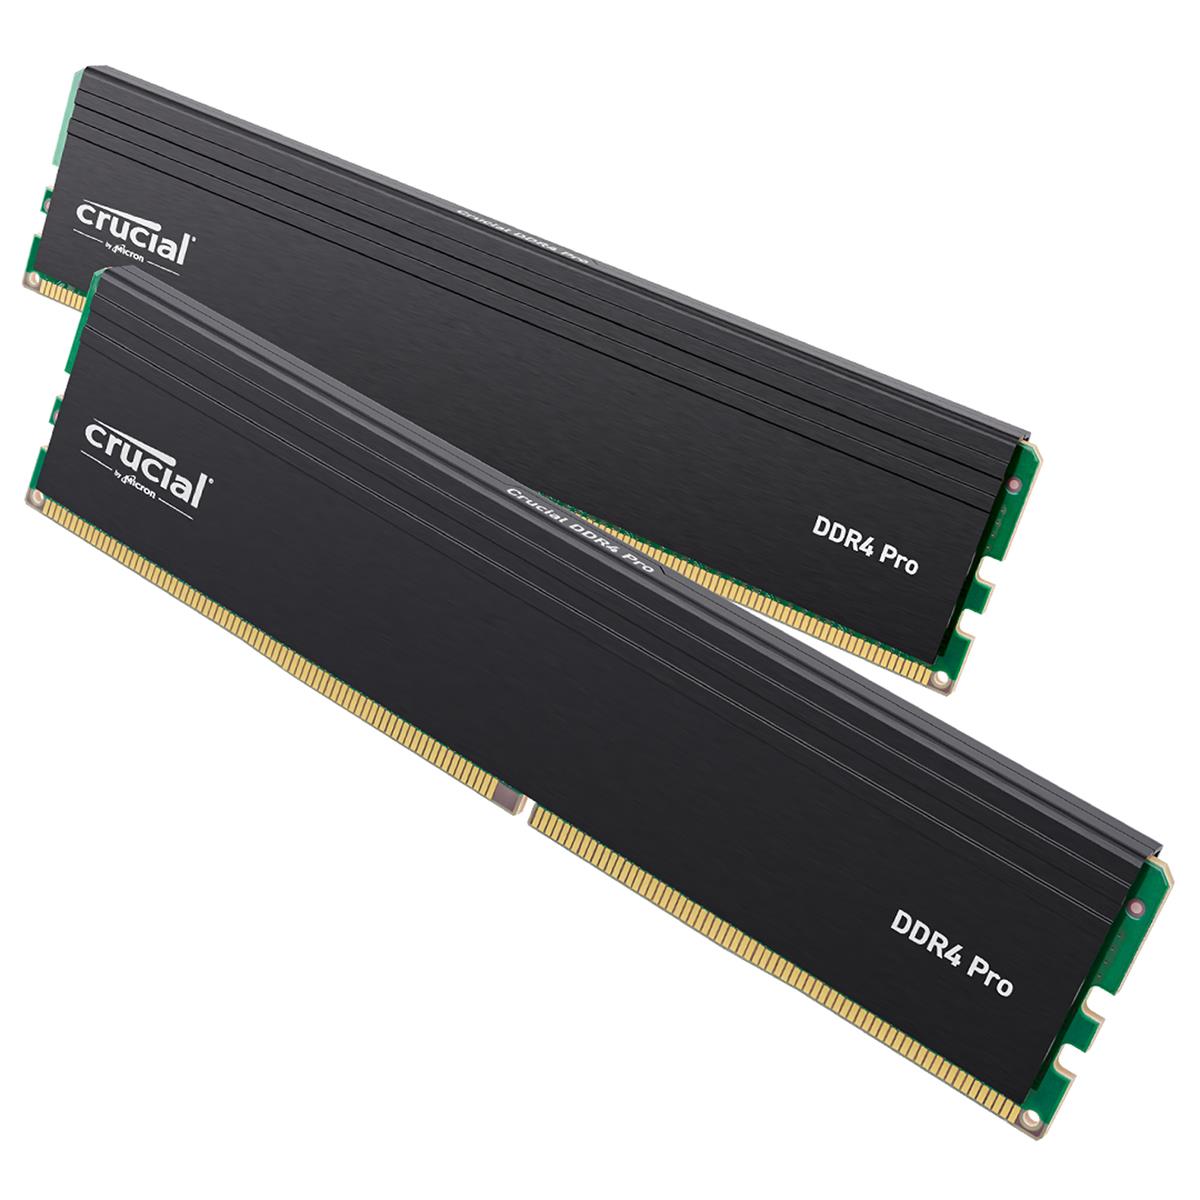 

Crucial Pro 64GB (2x32GB) DDR4 3200MHz CL22 UDIMM Desktop Memory Module